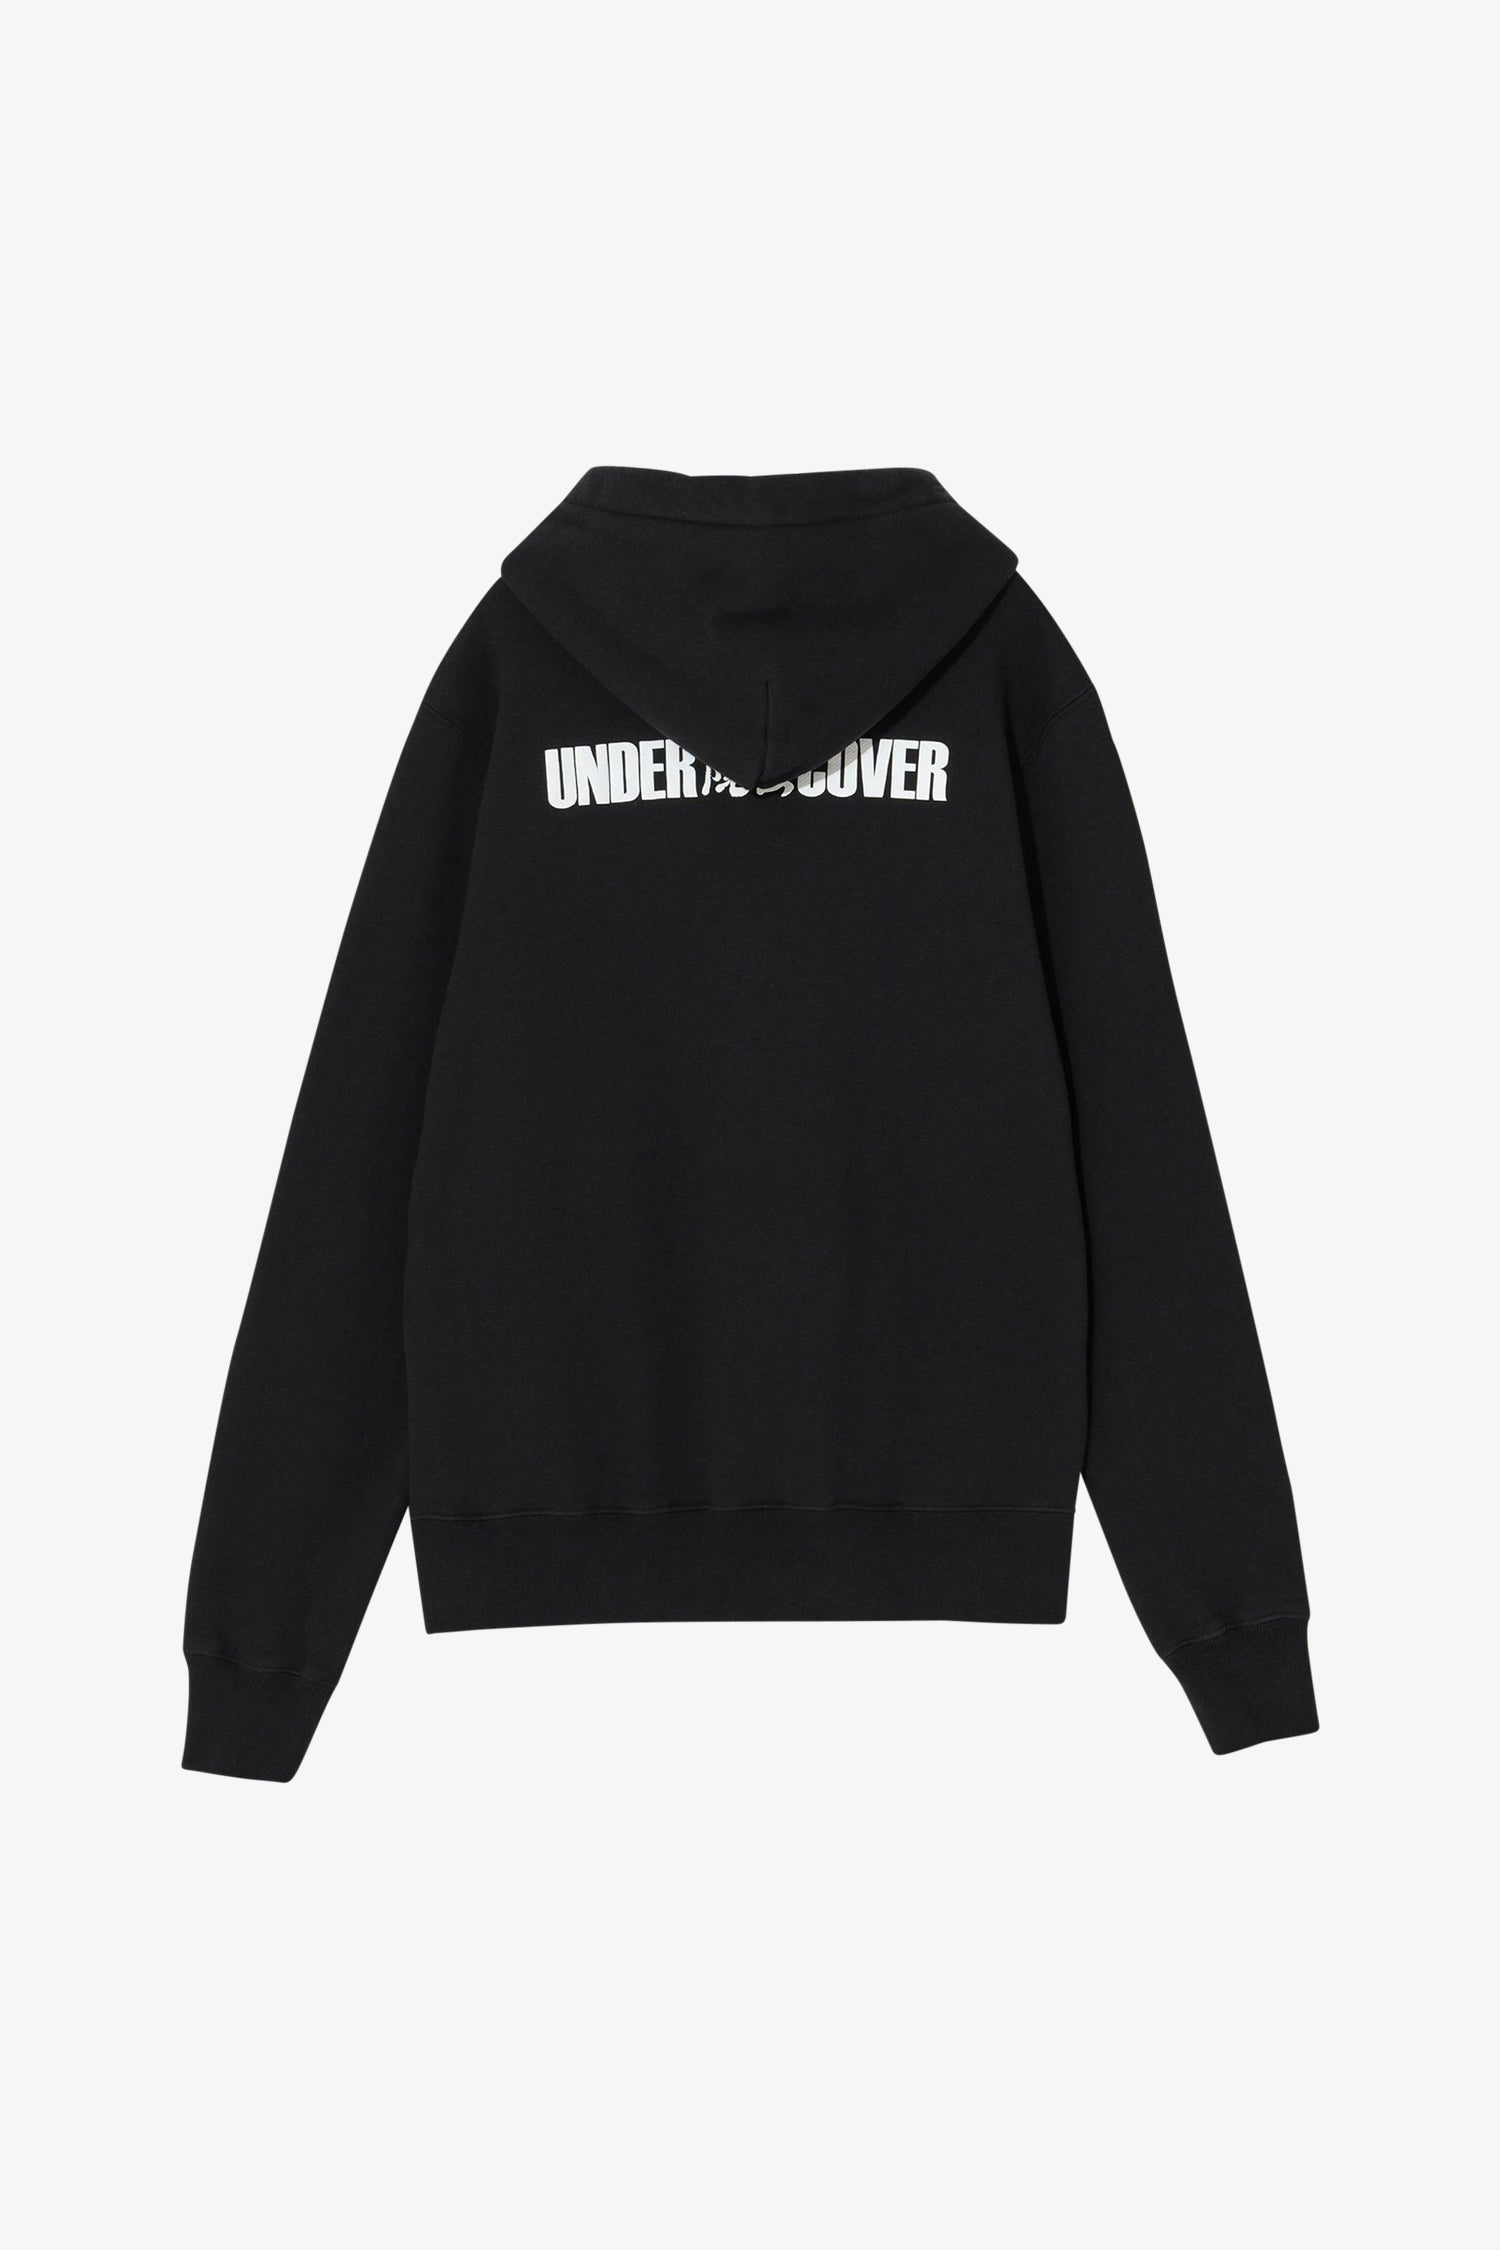 Selectshop FRAME - UNDERCOVER Covert Hoodie Sweatshirt Dubai